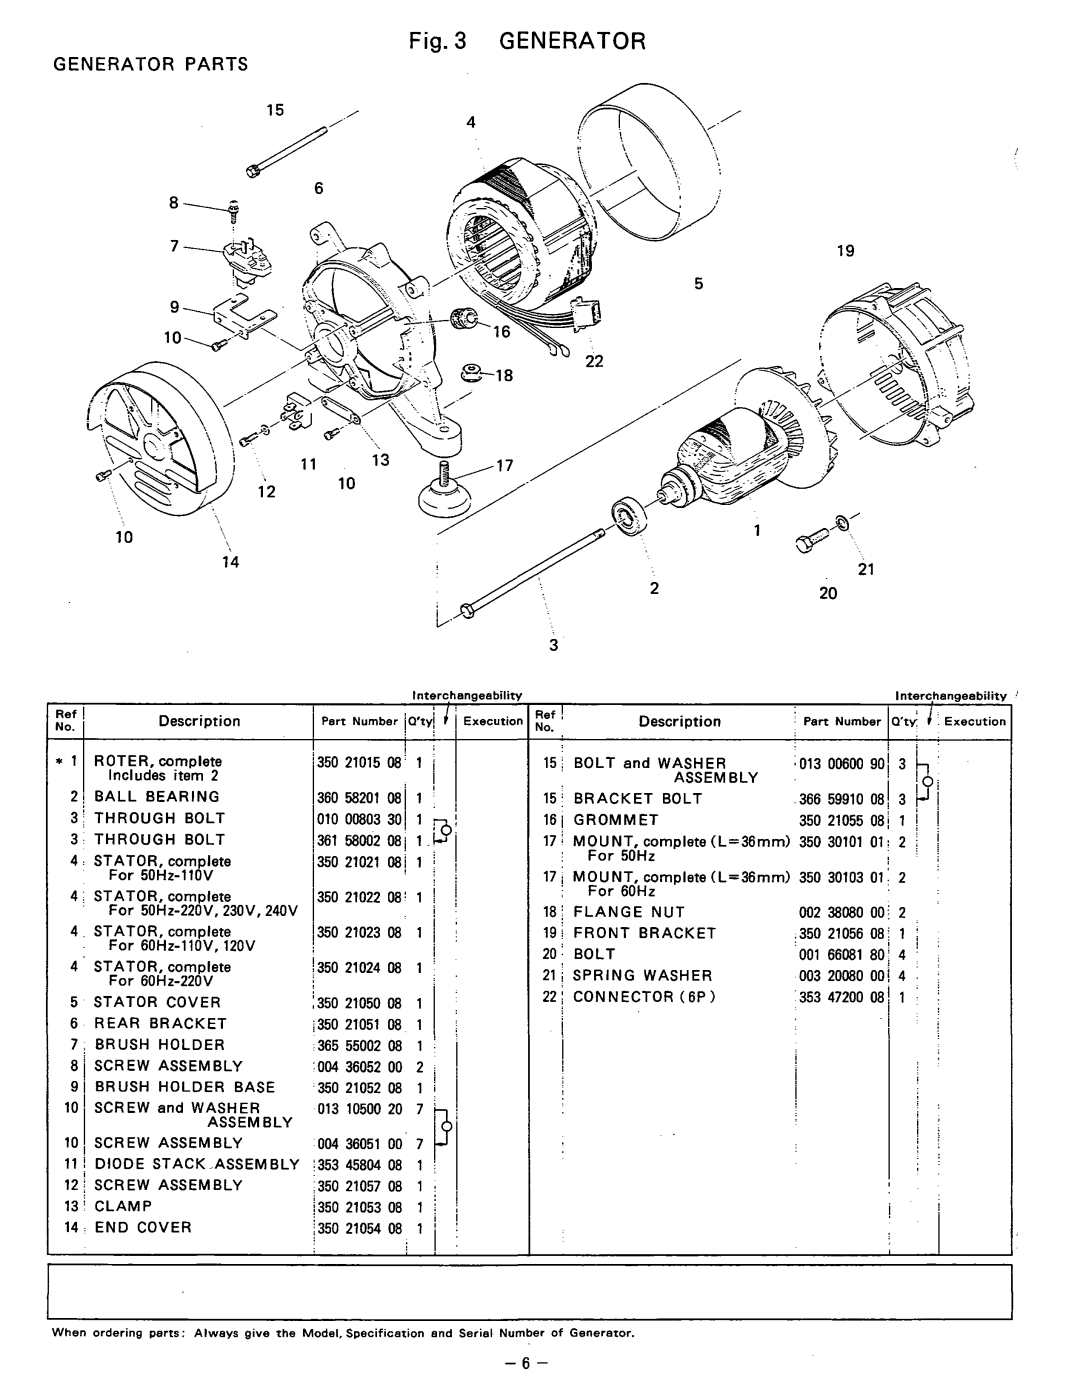 Subaru Robin Power Products R1200 manual I ri, Generator Parts 